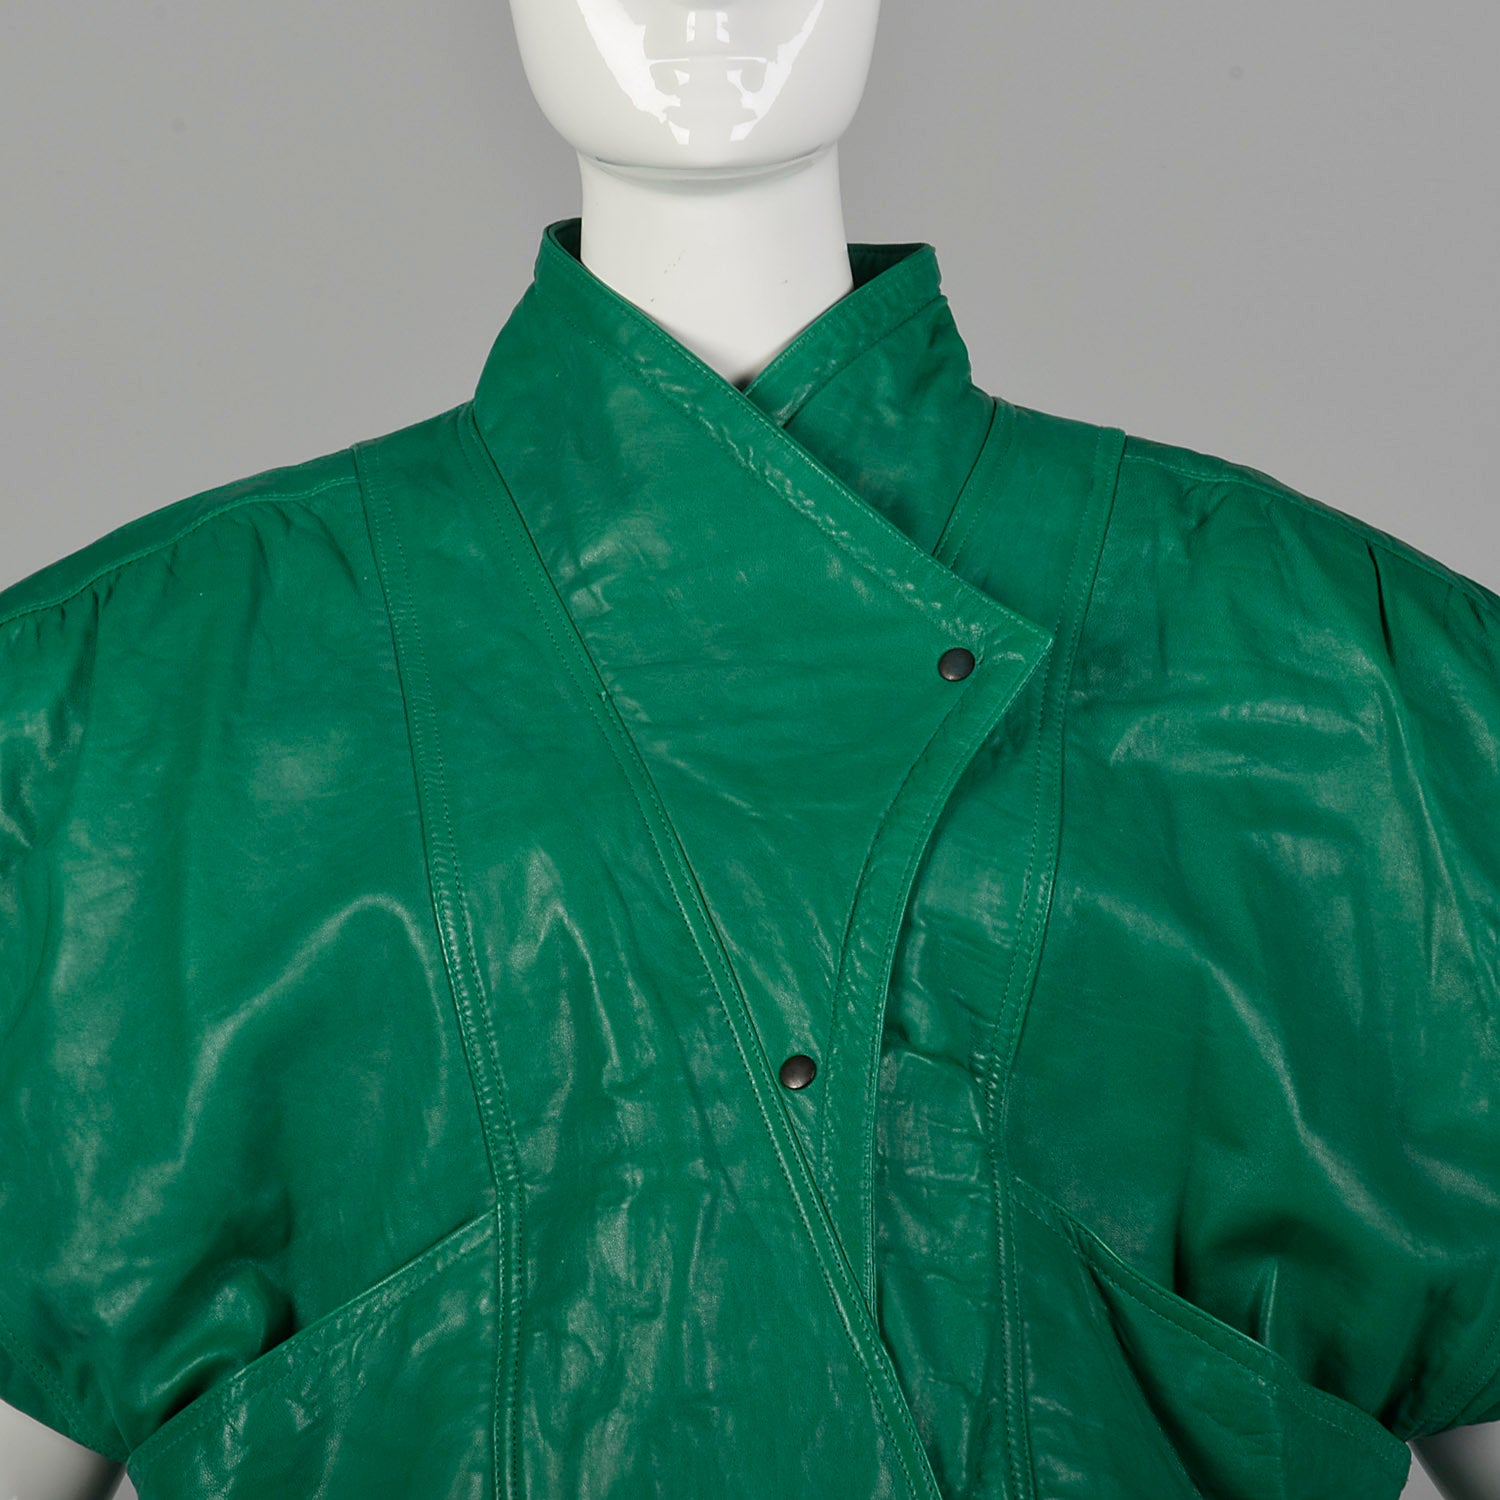 Medium Michael Hoban for North Beach Leather 1980s Green Leather Skirt Set